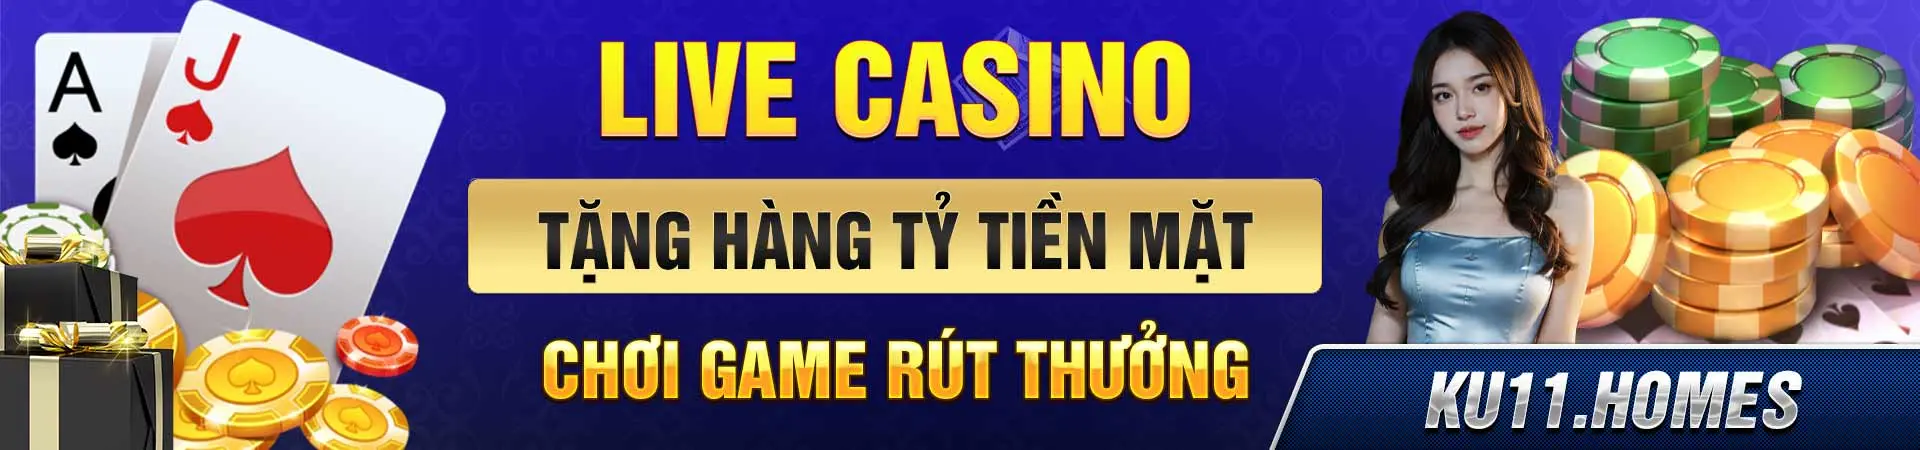 Live-casino-tang-hang-ty-tien-mat-choi-game-rut-thuong